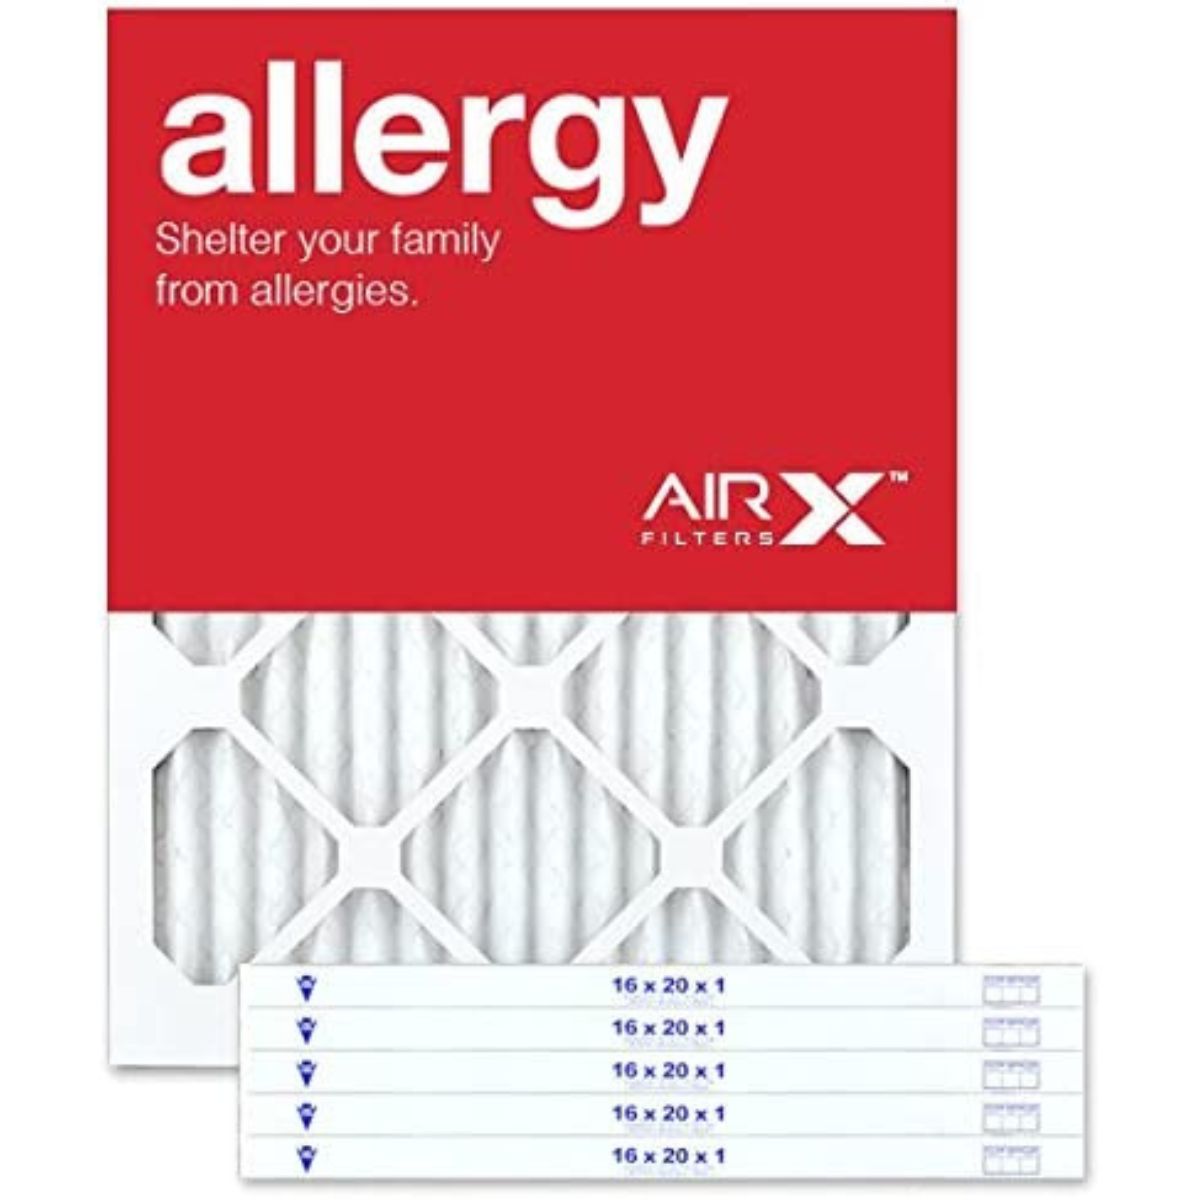 AIRx Allergy MERV 11 Pleated Air Filter